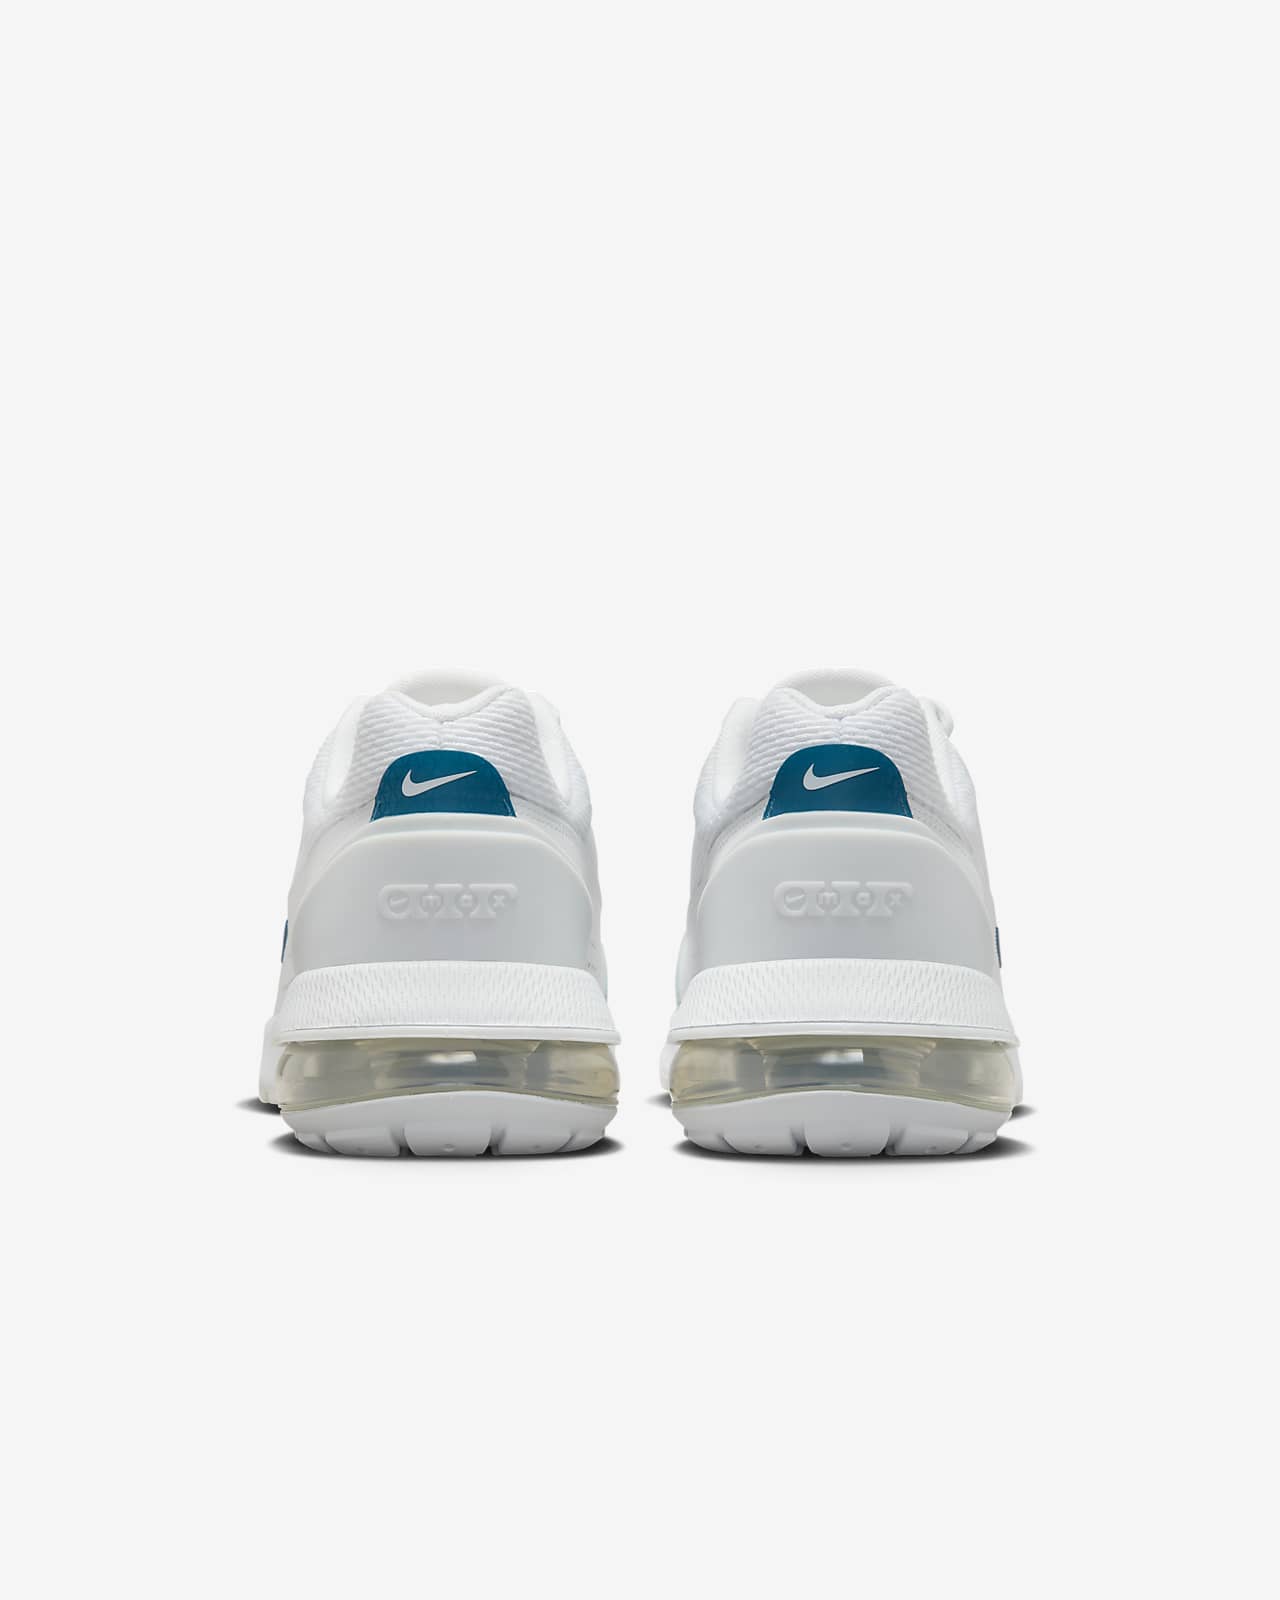 Nike Air Max Genome Triple White (Women's)